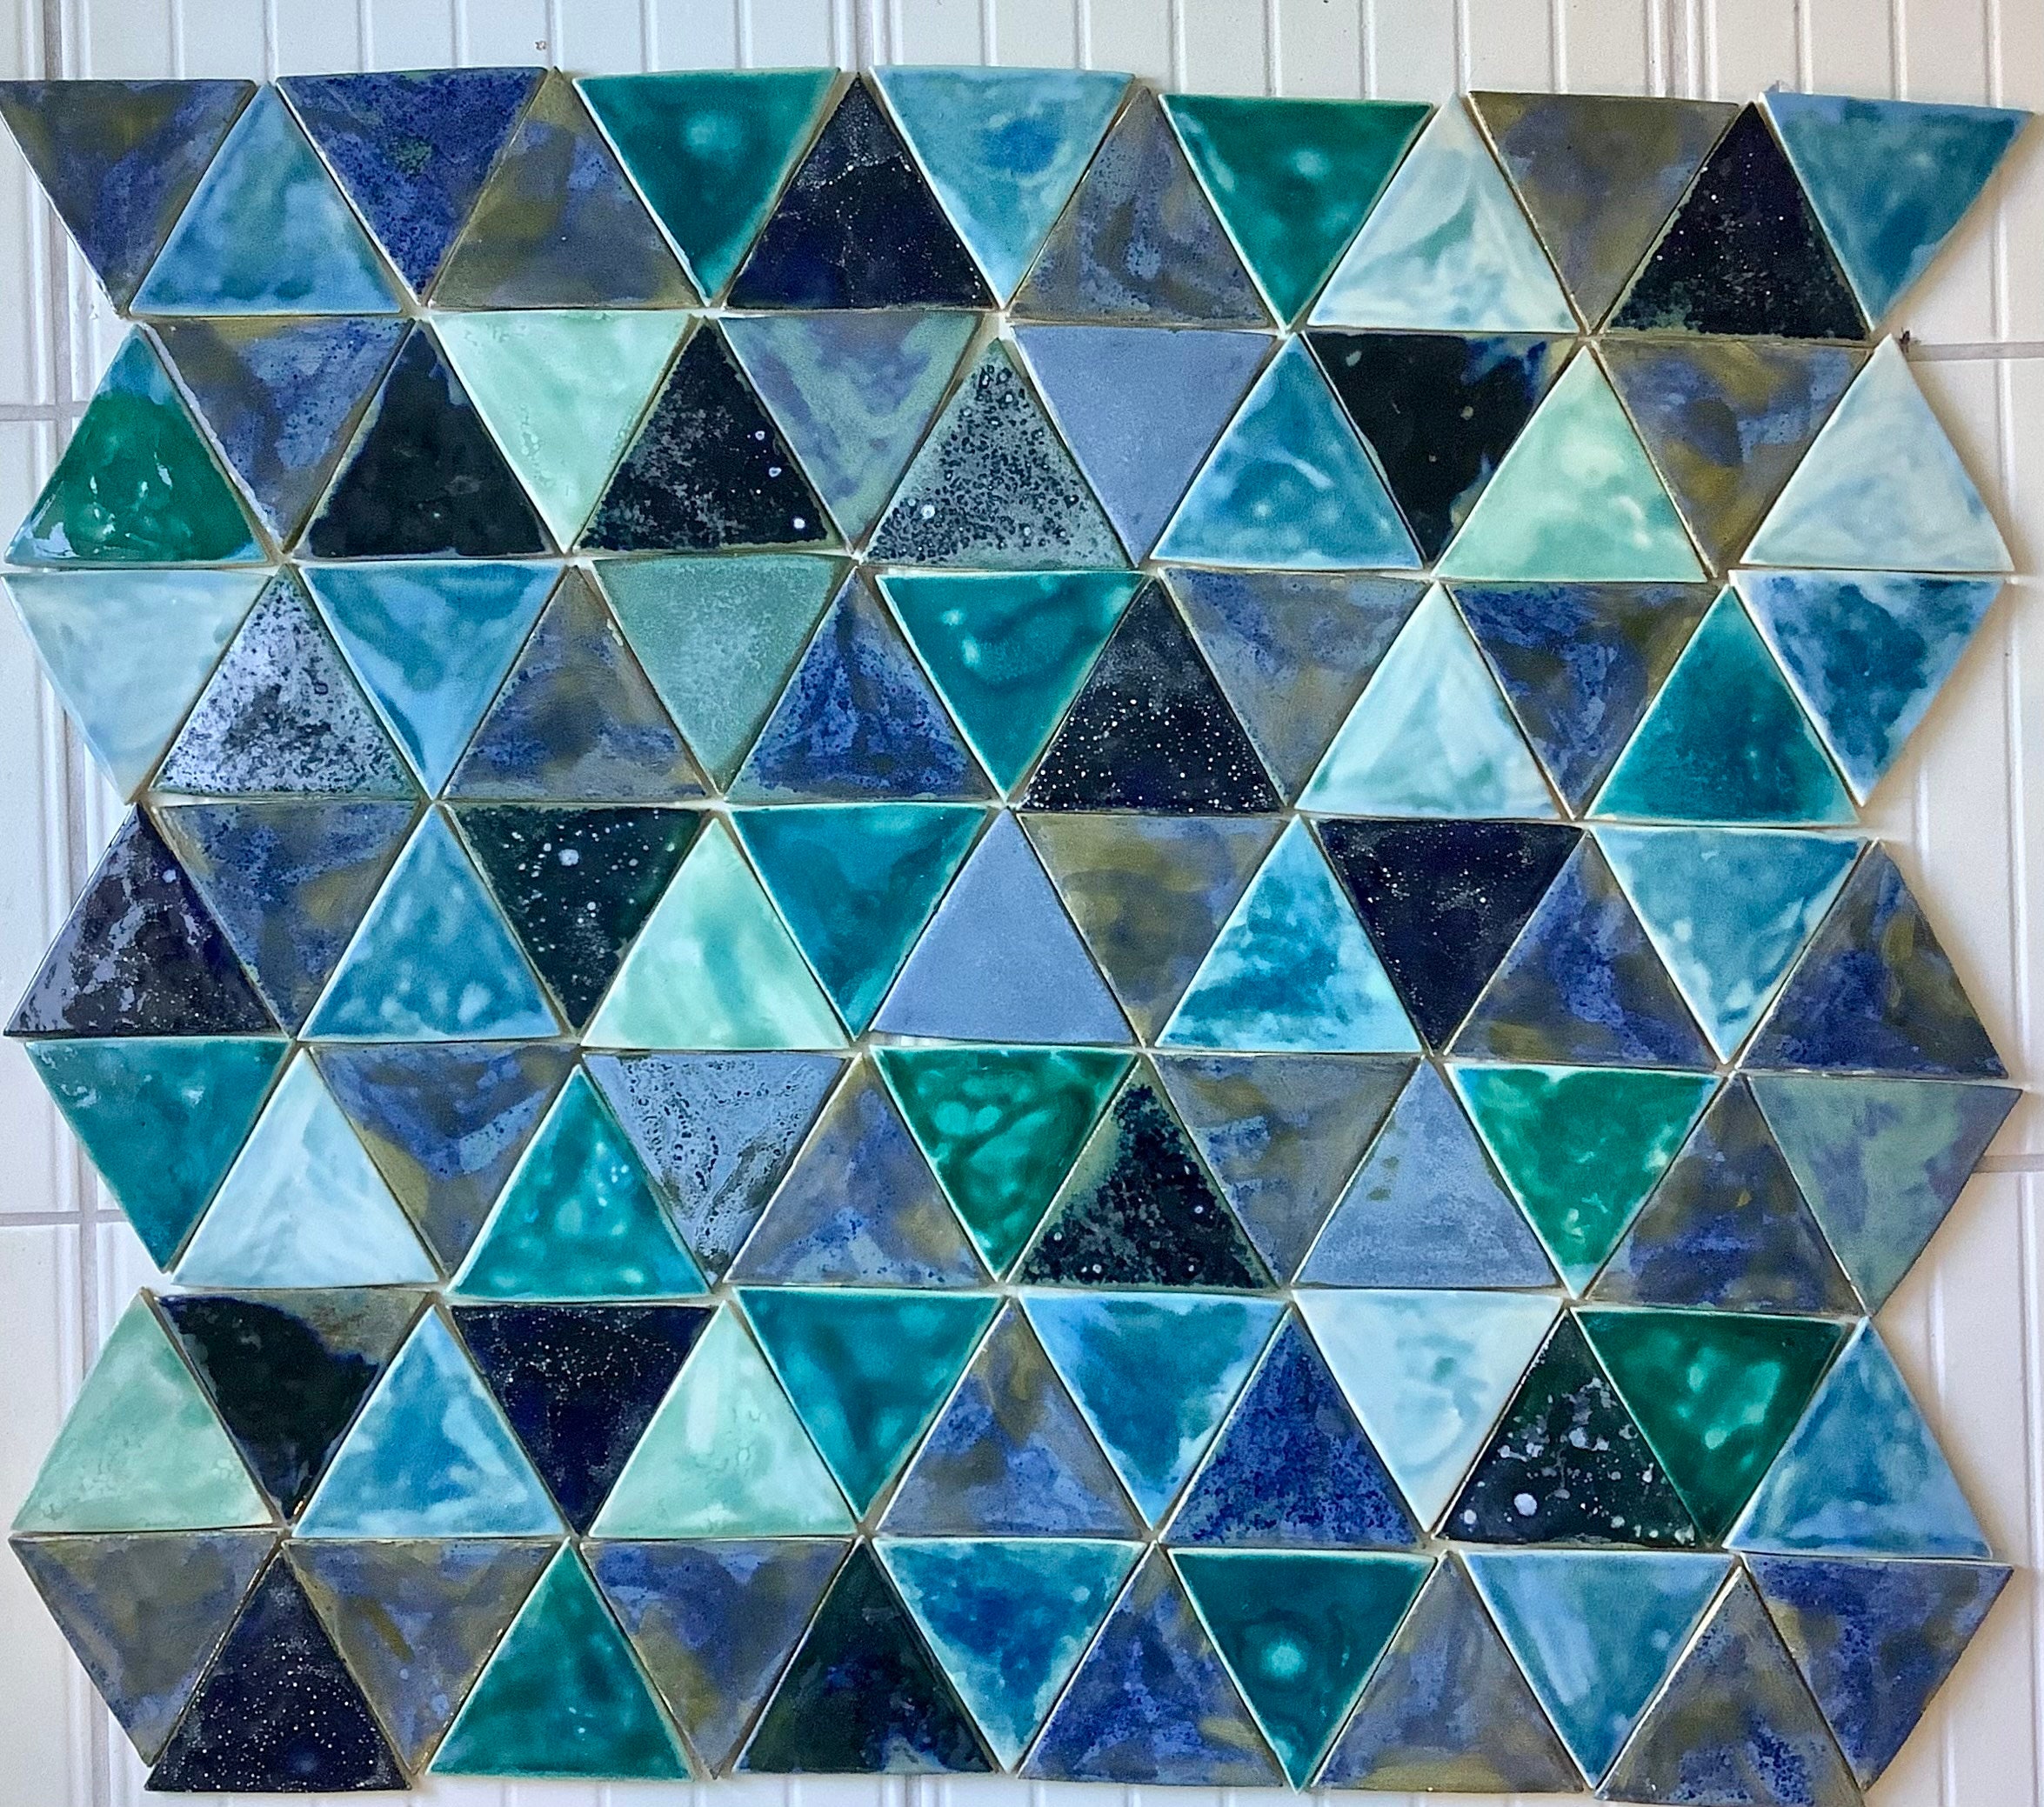 1 Triangle Mirror Mosaic Tiles Triangular Shape Craft Mirrors 150pcs 